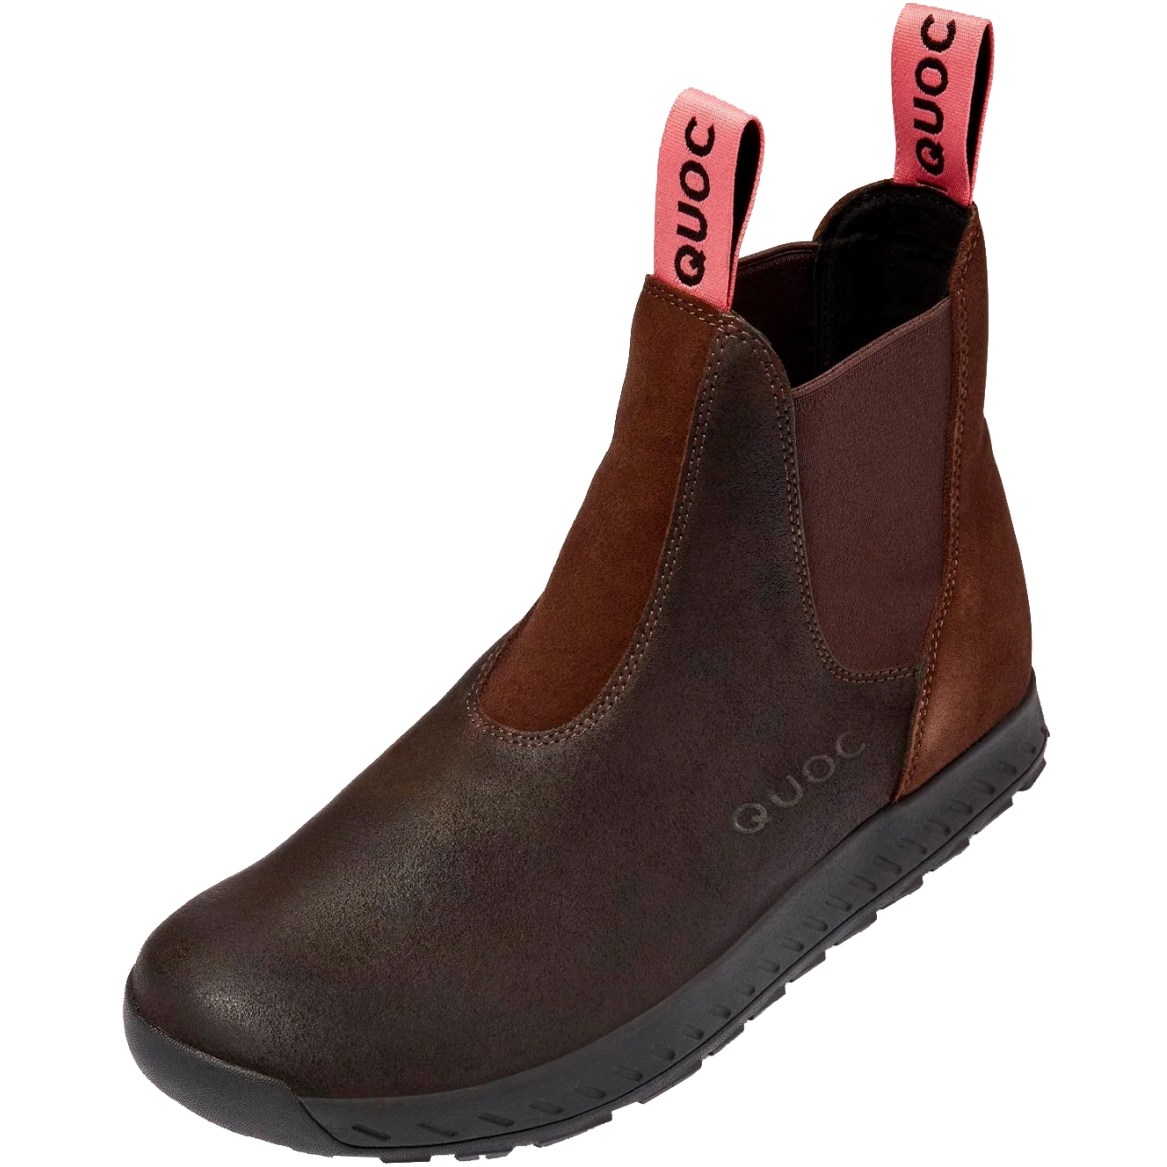 Productfoto van QUOC Chelsea Boot City Shoes - brown